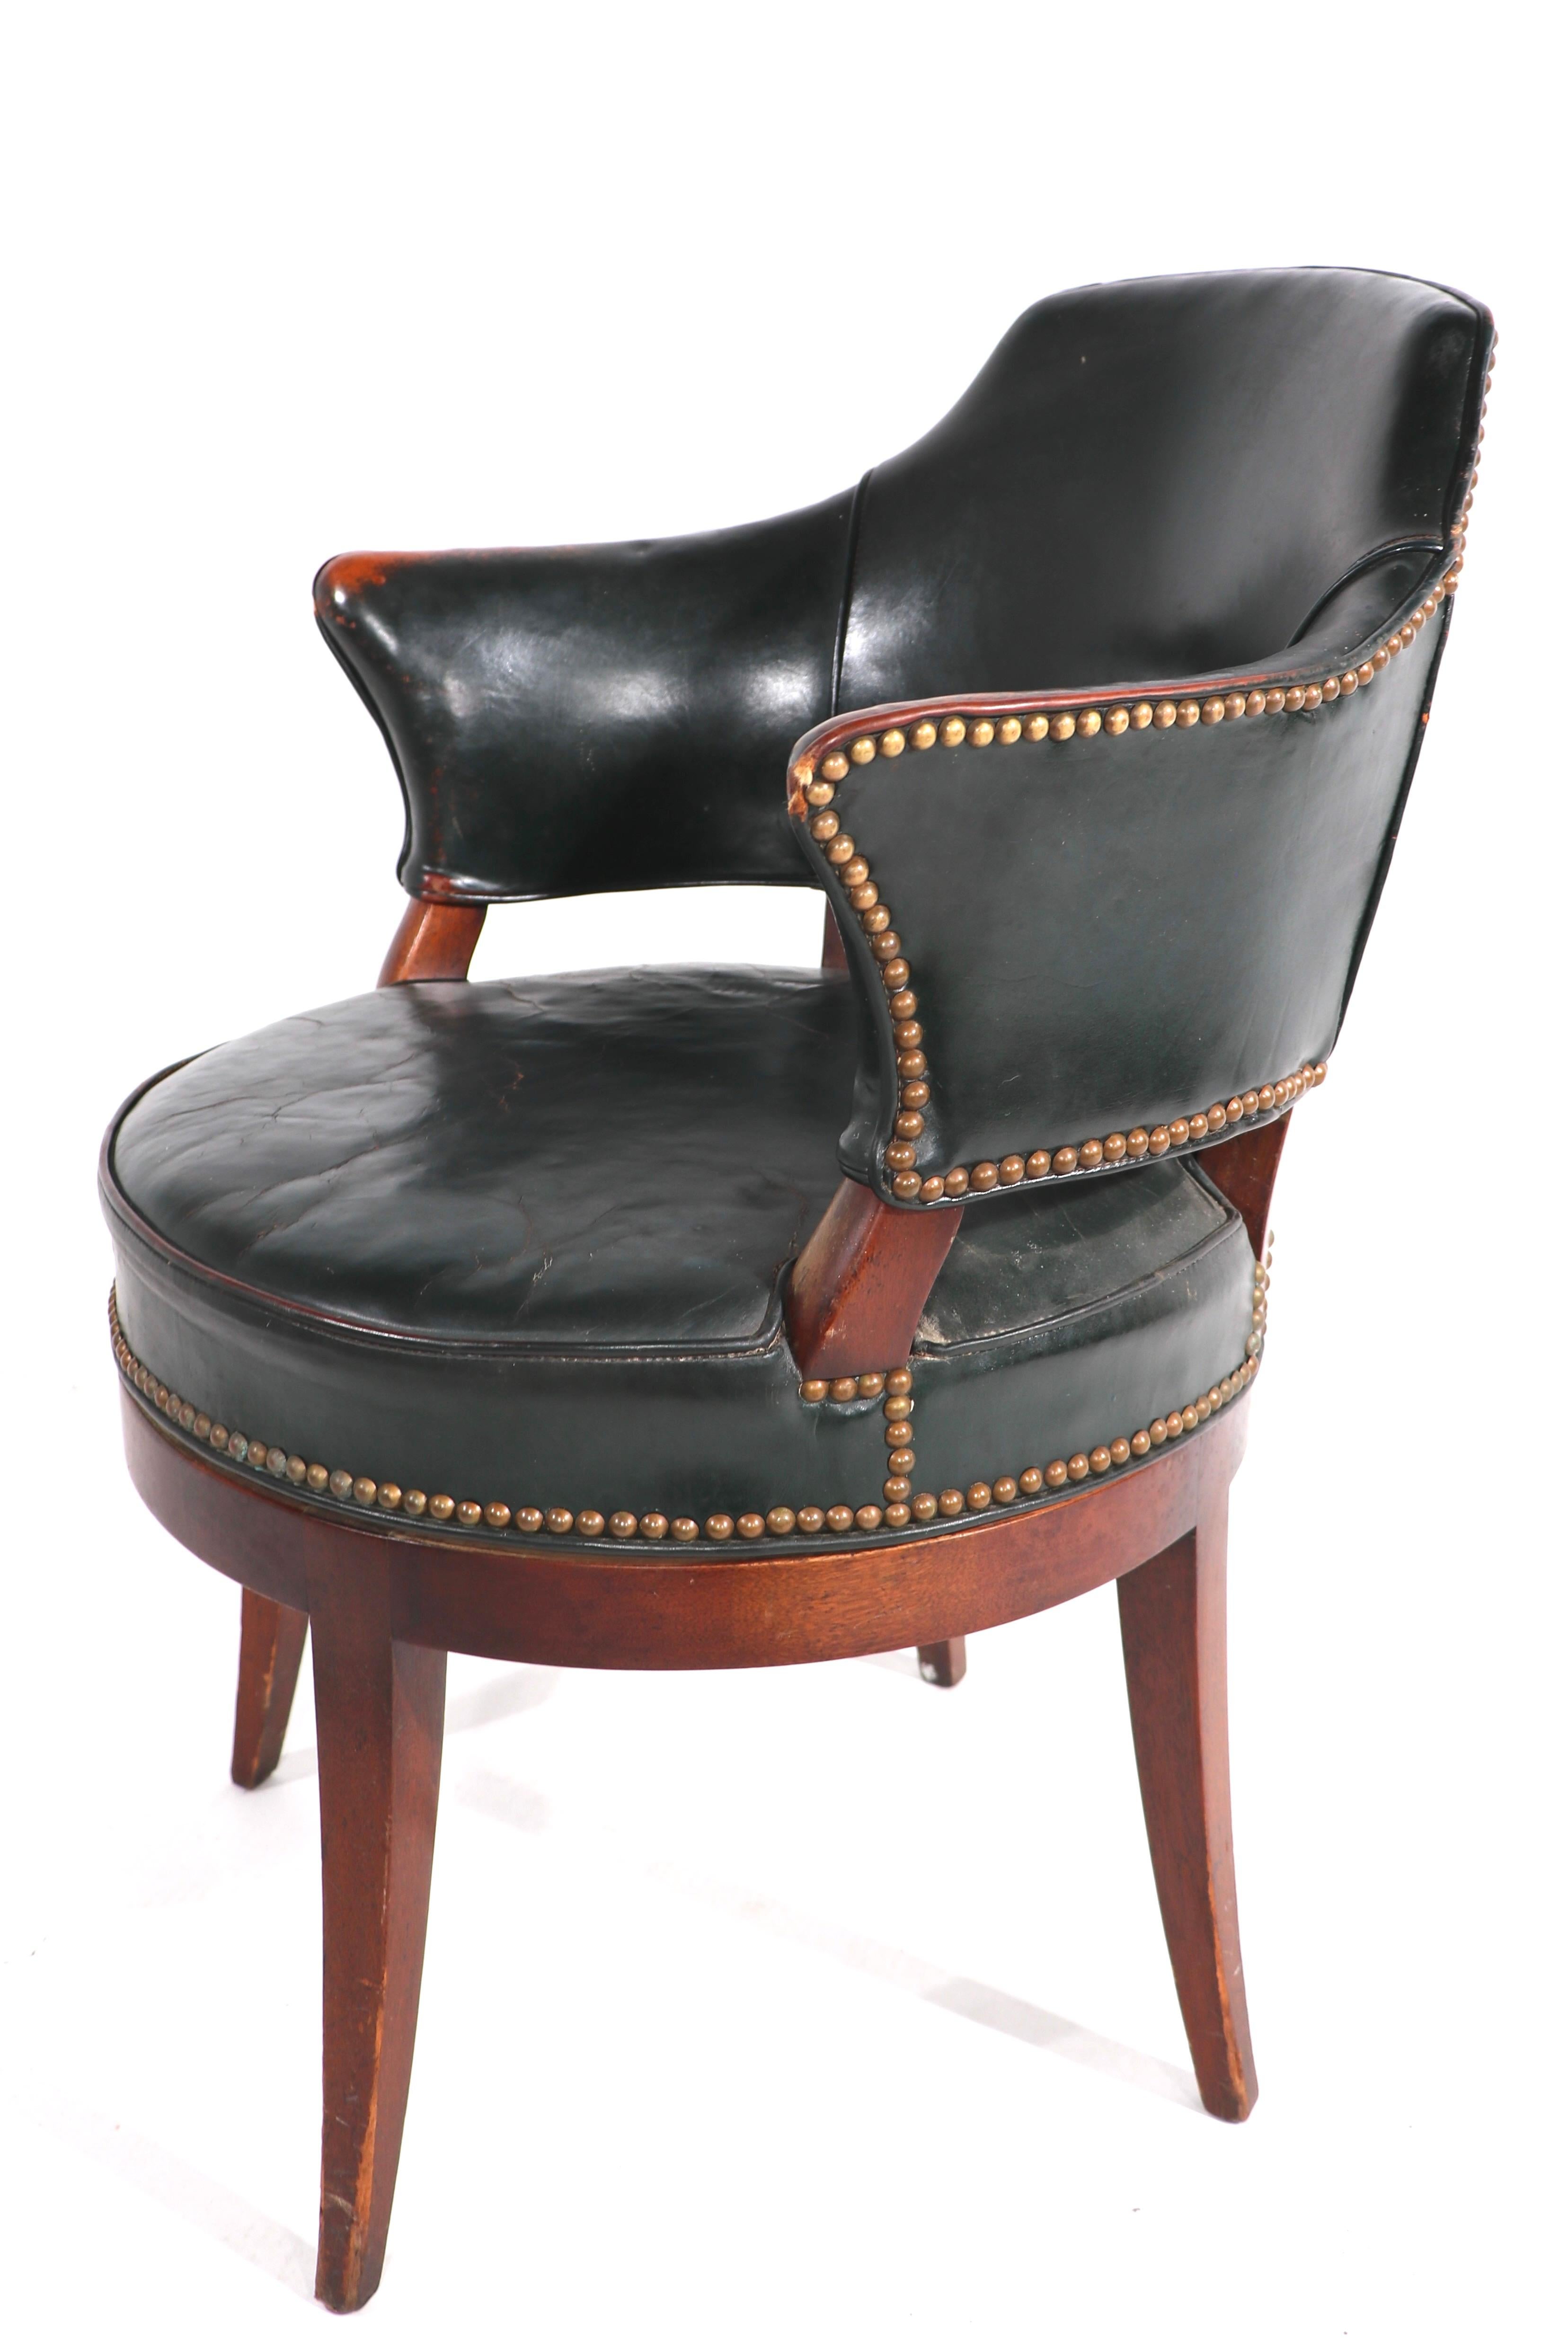 American Art Deco Leather and Wood Swivel Vanity Stool